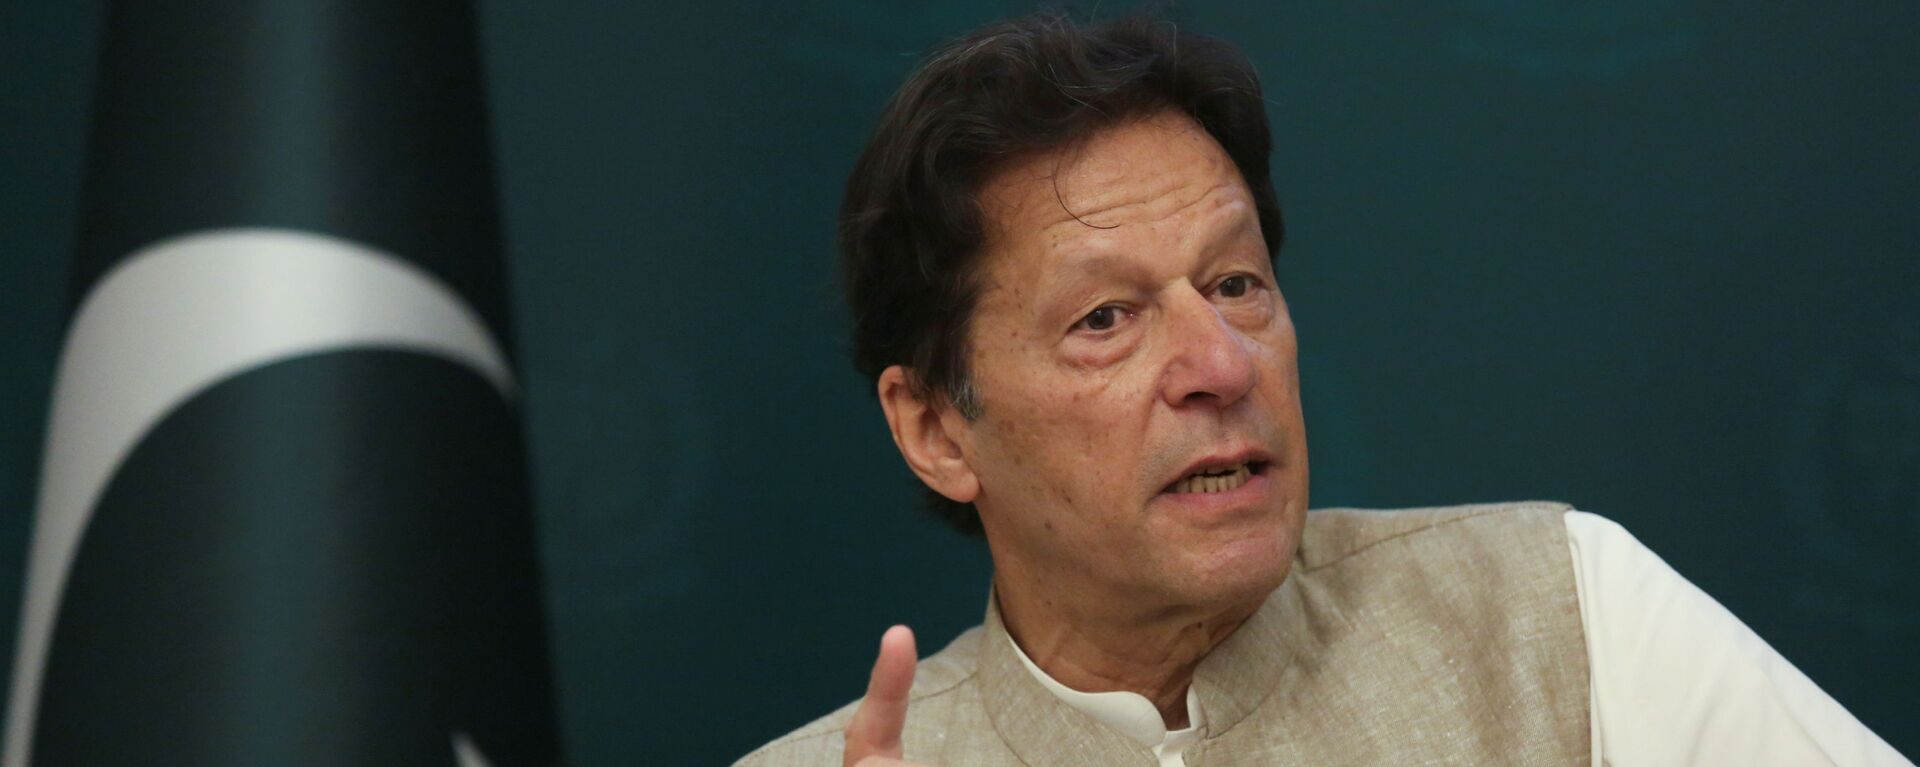 Pakistan's Prime Minister Imran Khan speaks during an interview with Reuters in Islamabad, Pakistan June 4, 2021 - Sputnik International, 1920, 09.12.2021